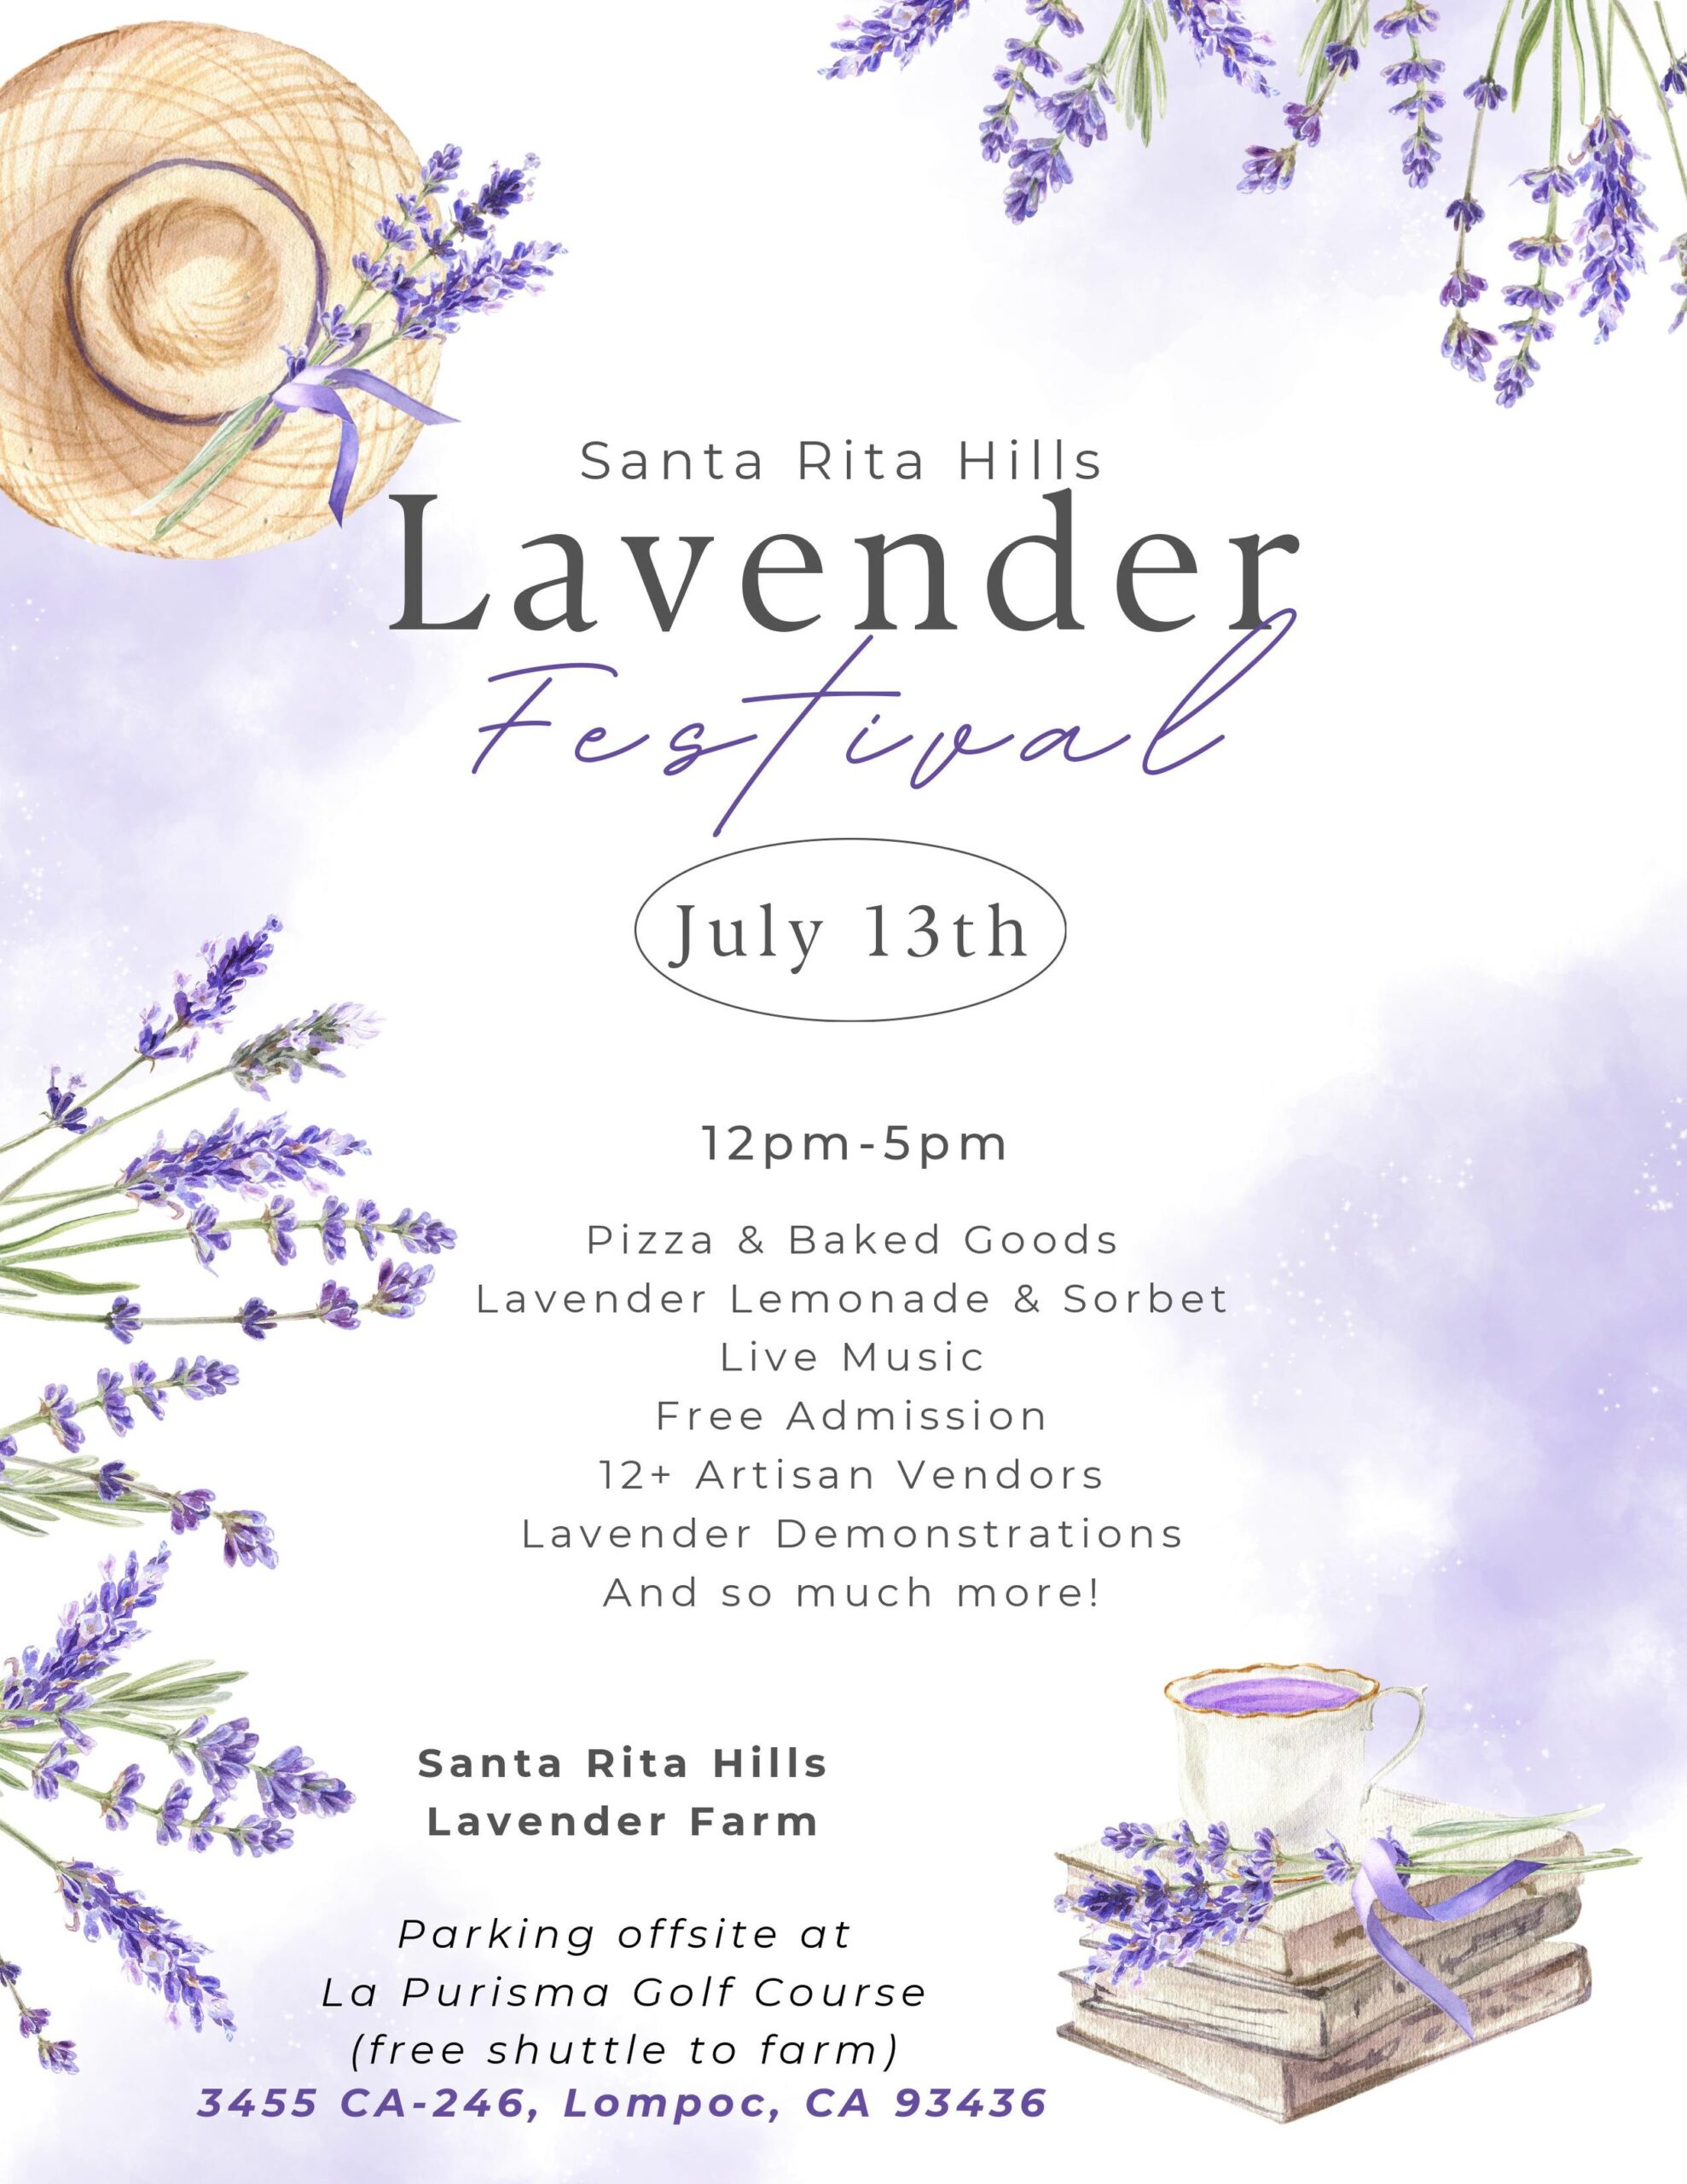 Santa Rita Hills Lavender Festival